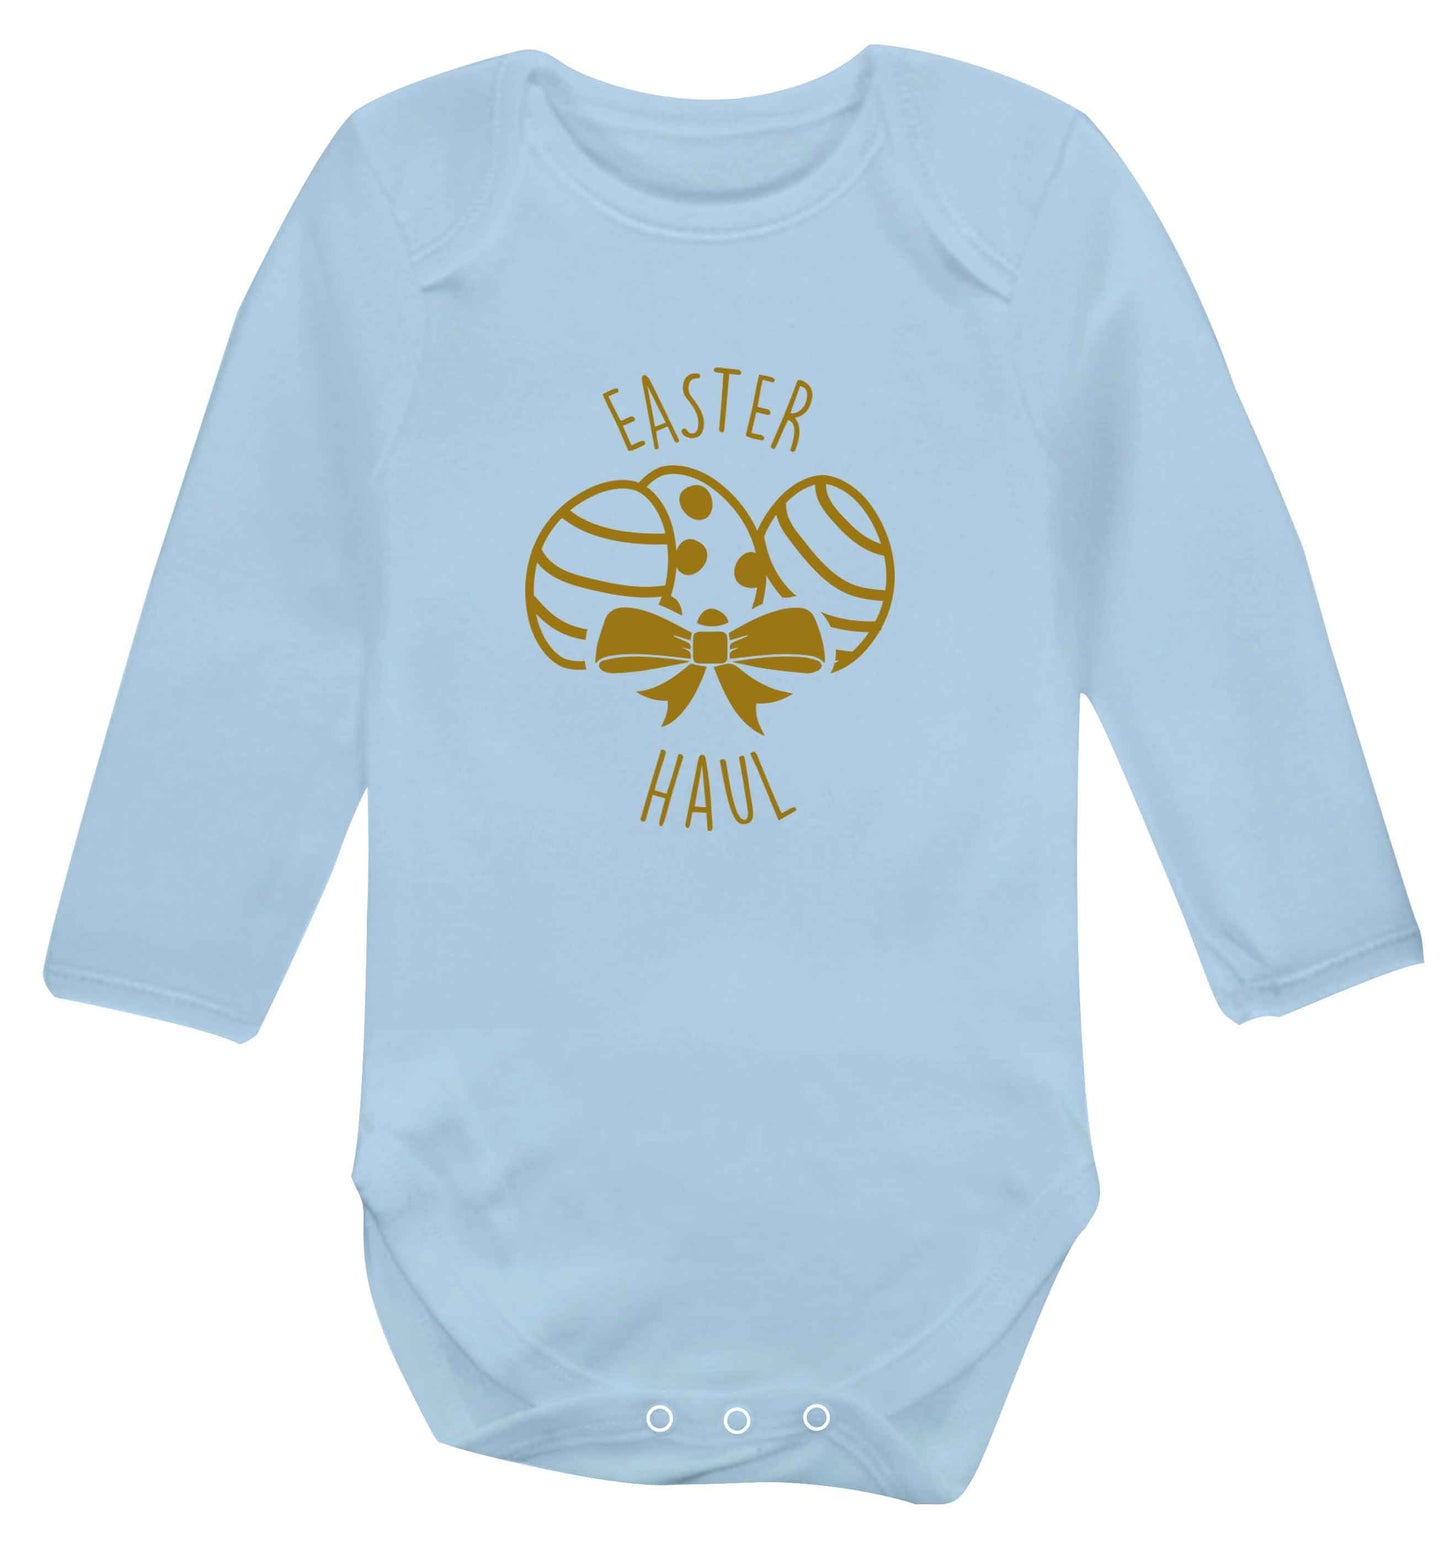 Easter haul baby vest long sleeved pale blue 6-12 months